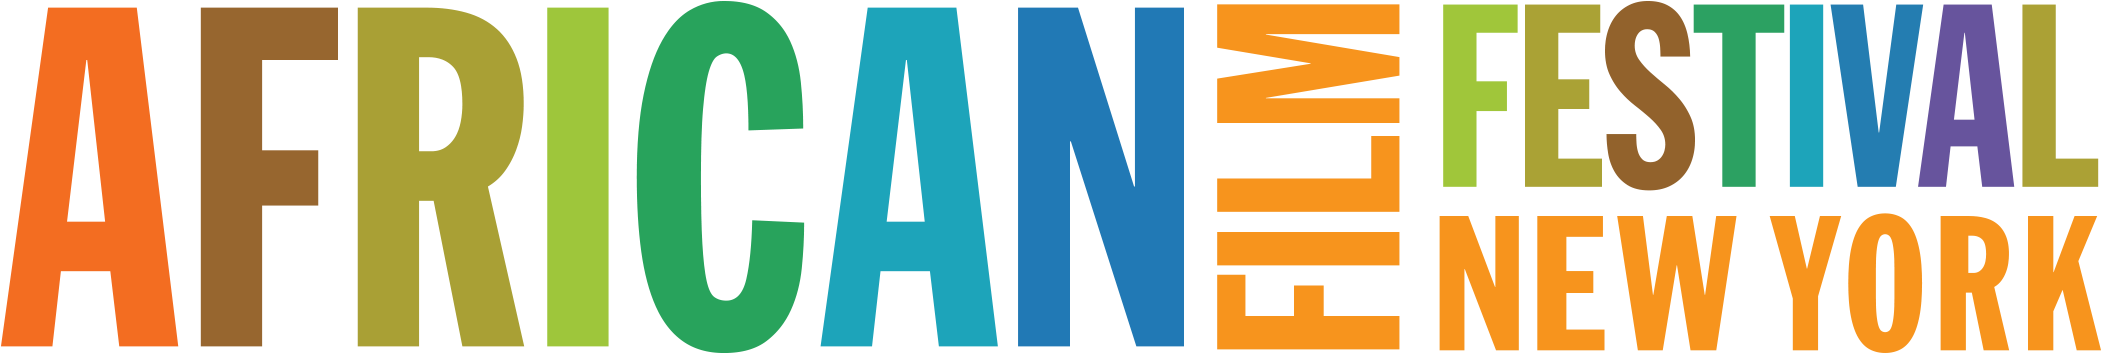 African Film Festival New York Logo PNG